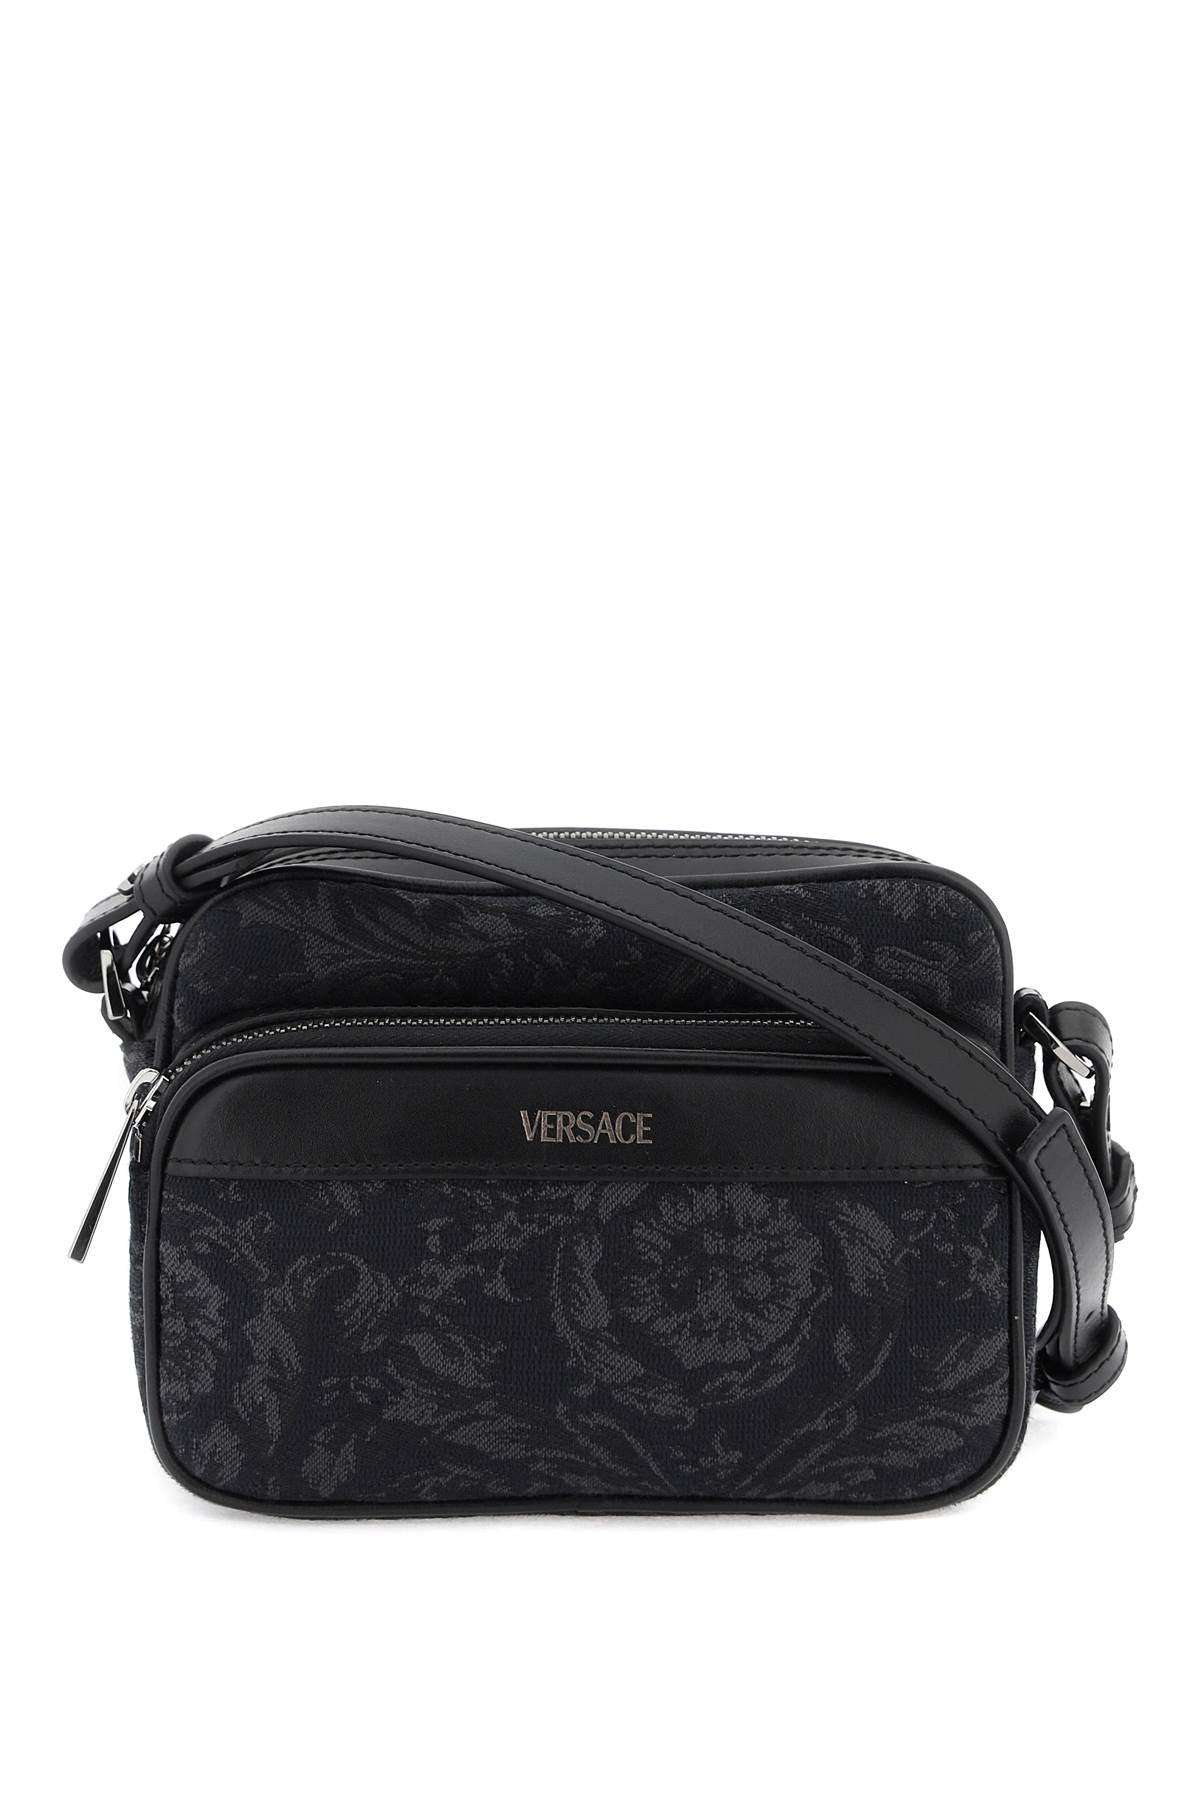 Versace baroque messenger bag-0